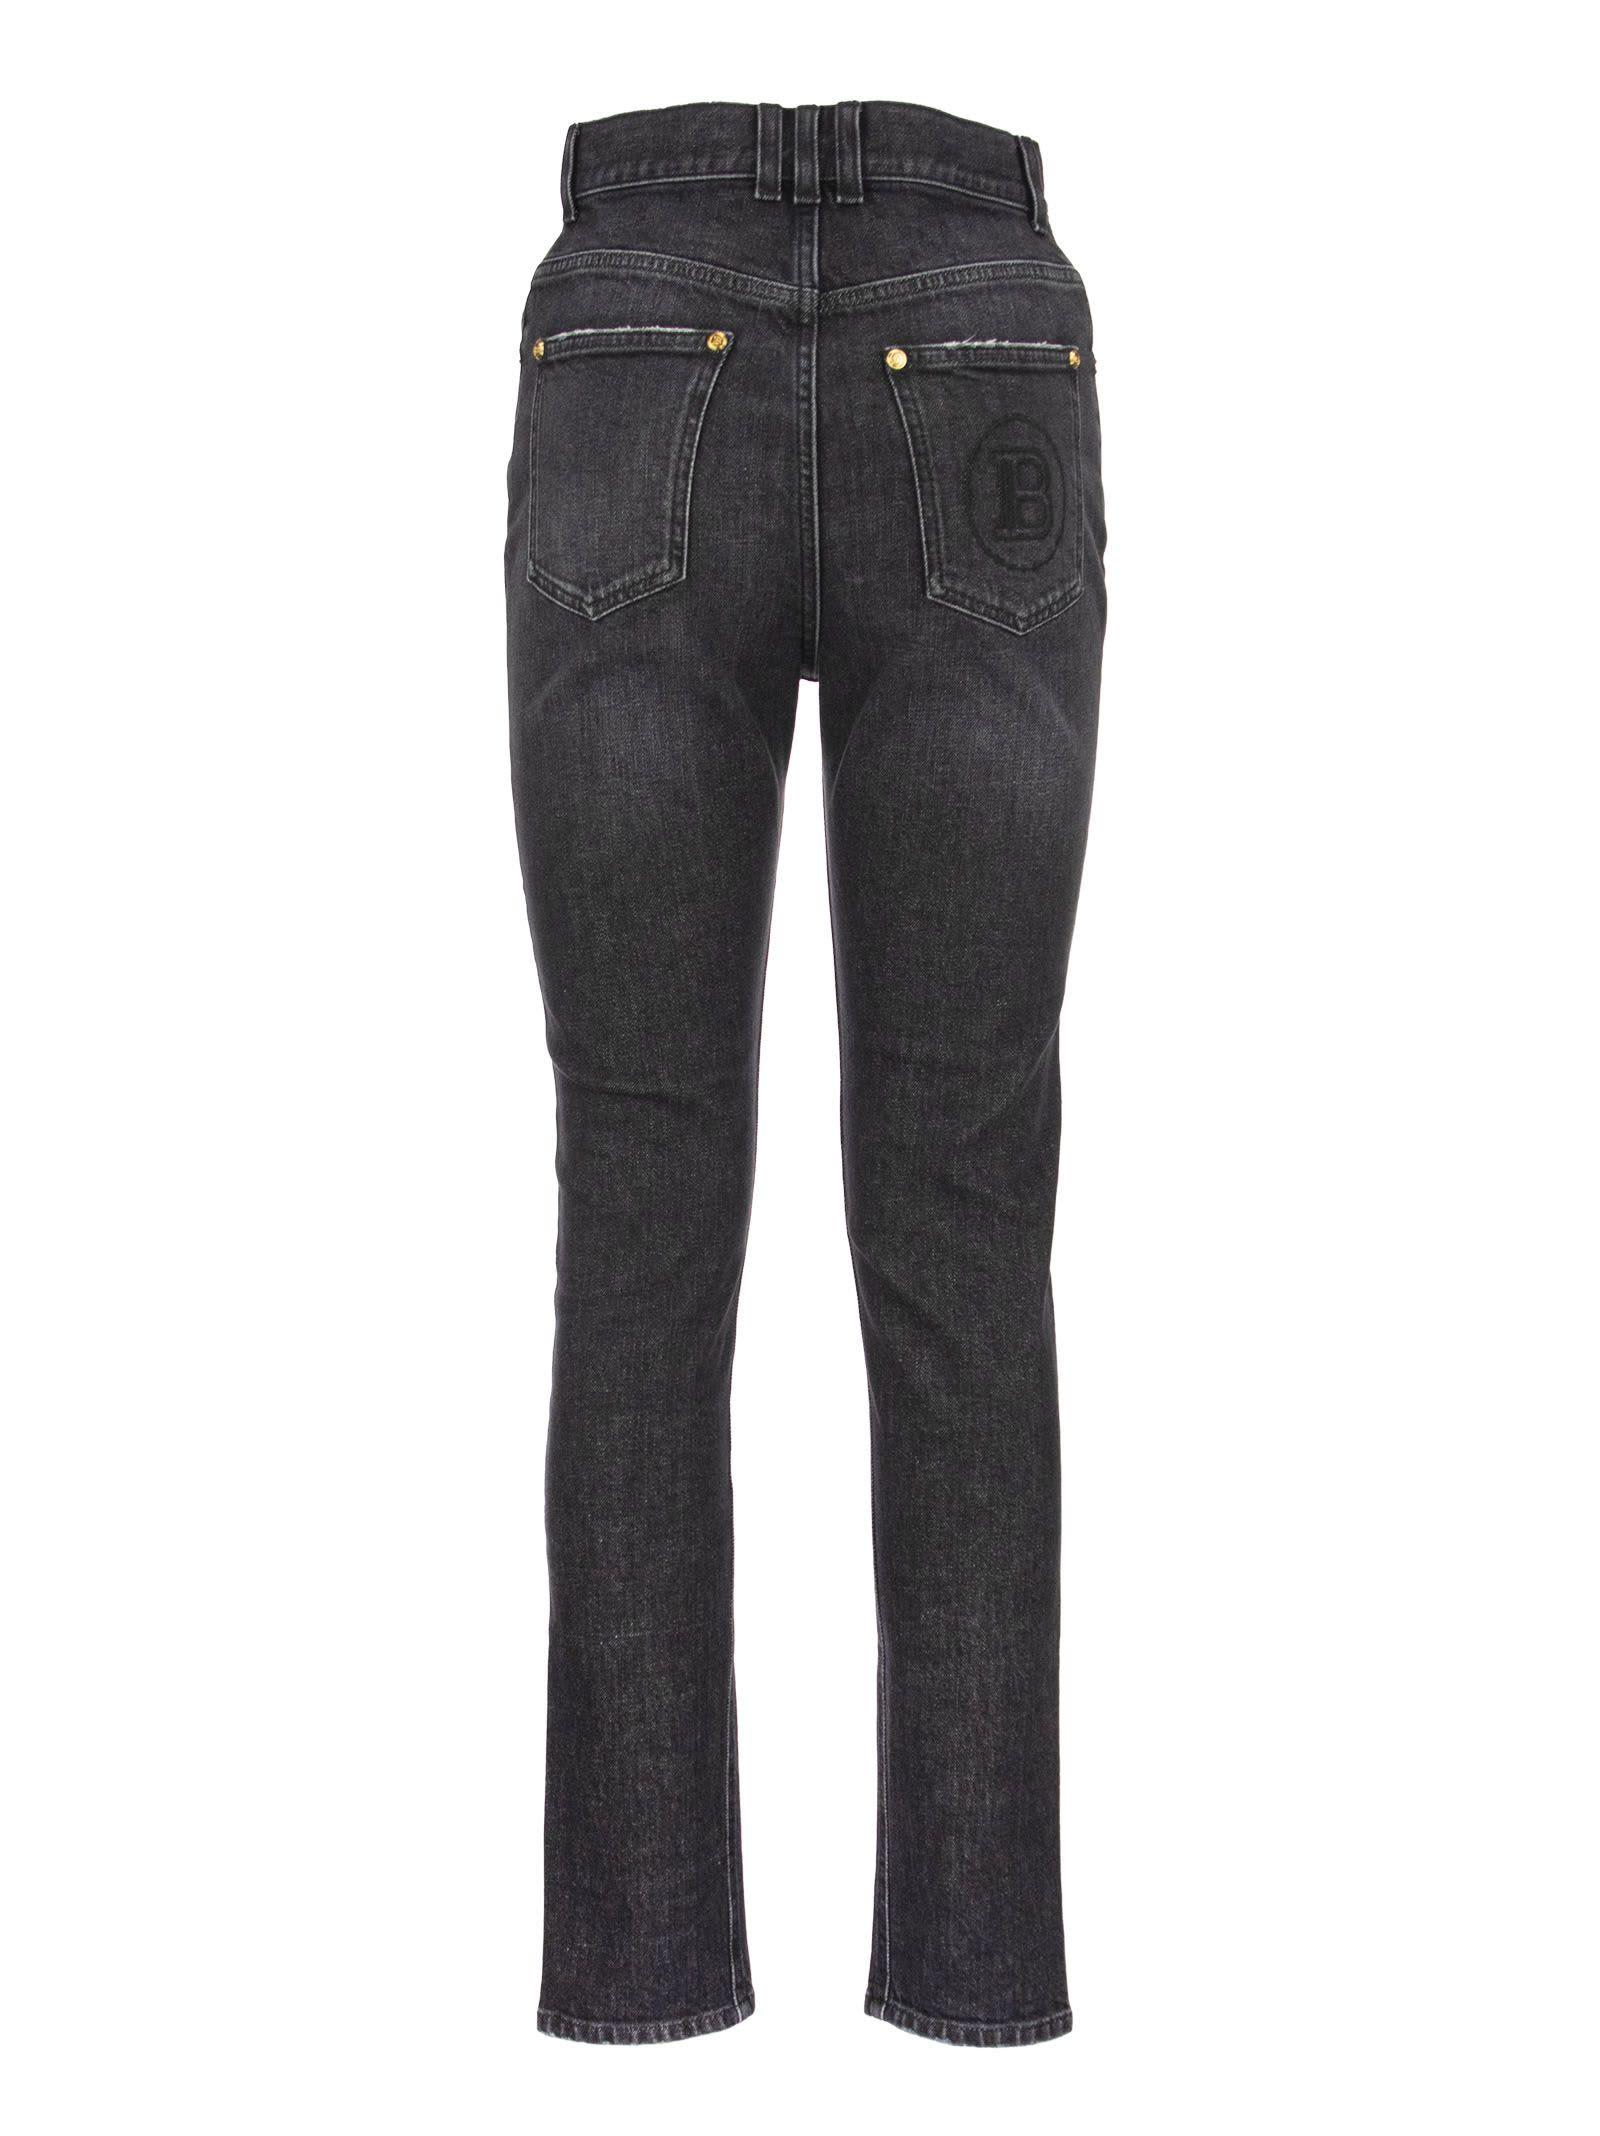 Balmain Denim High Waist Skinny Jeans in Black - Lyst